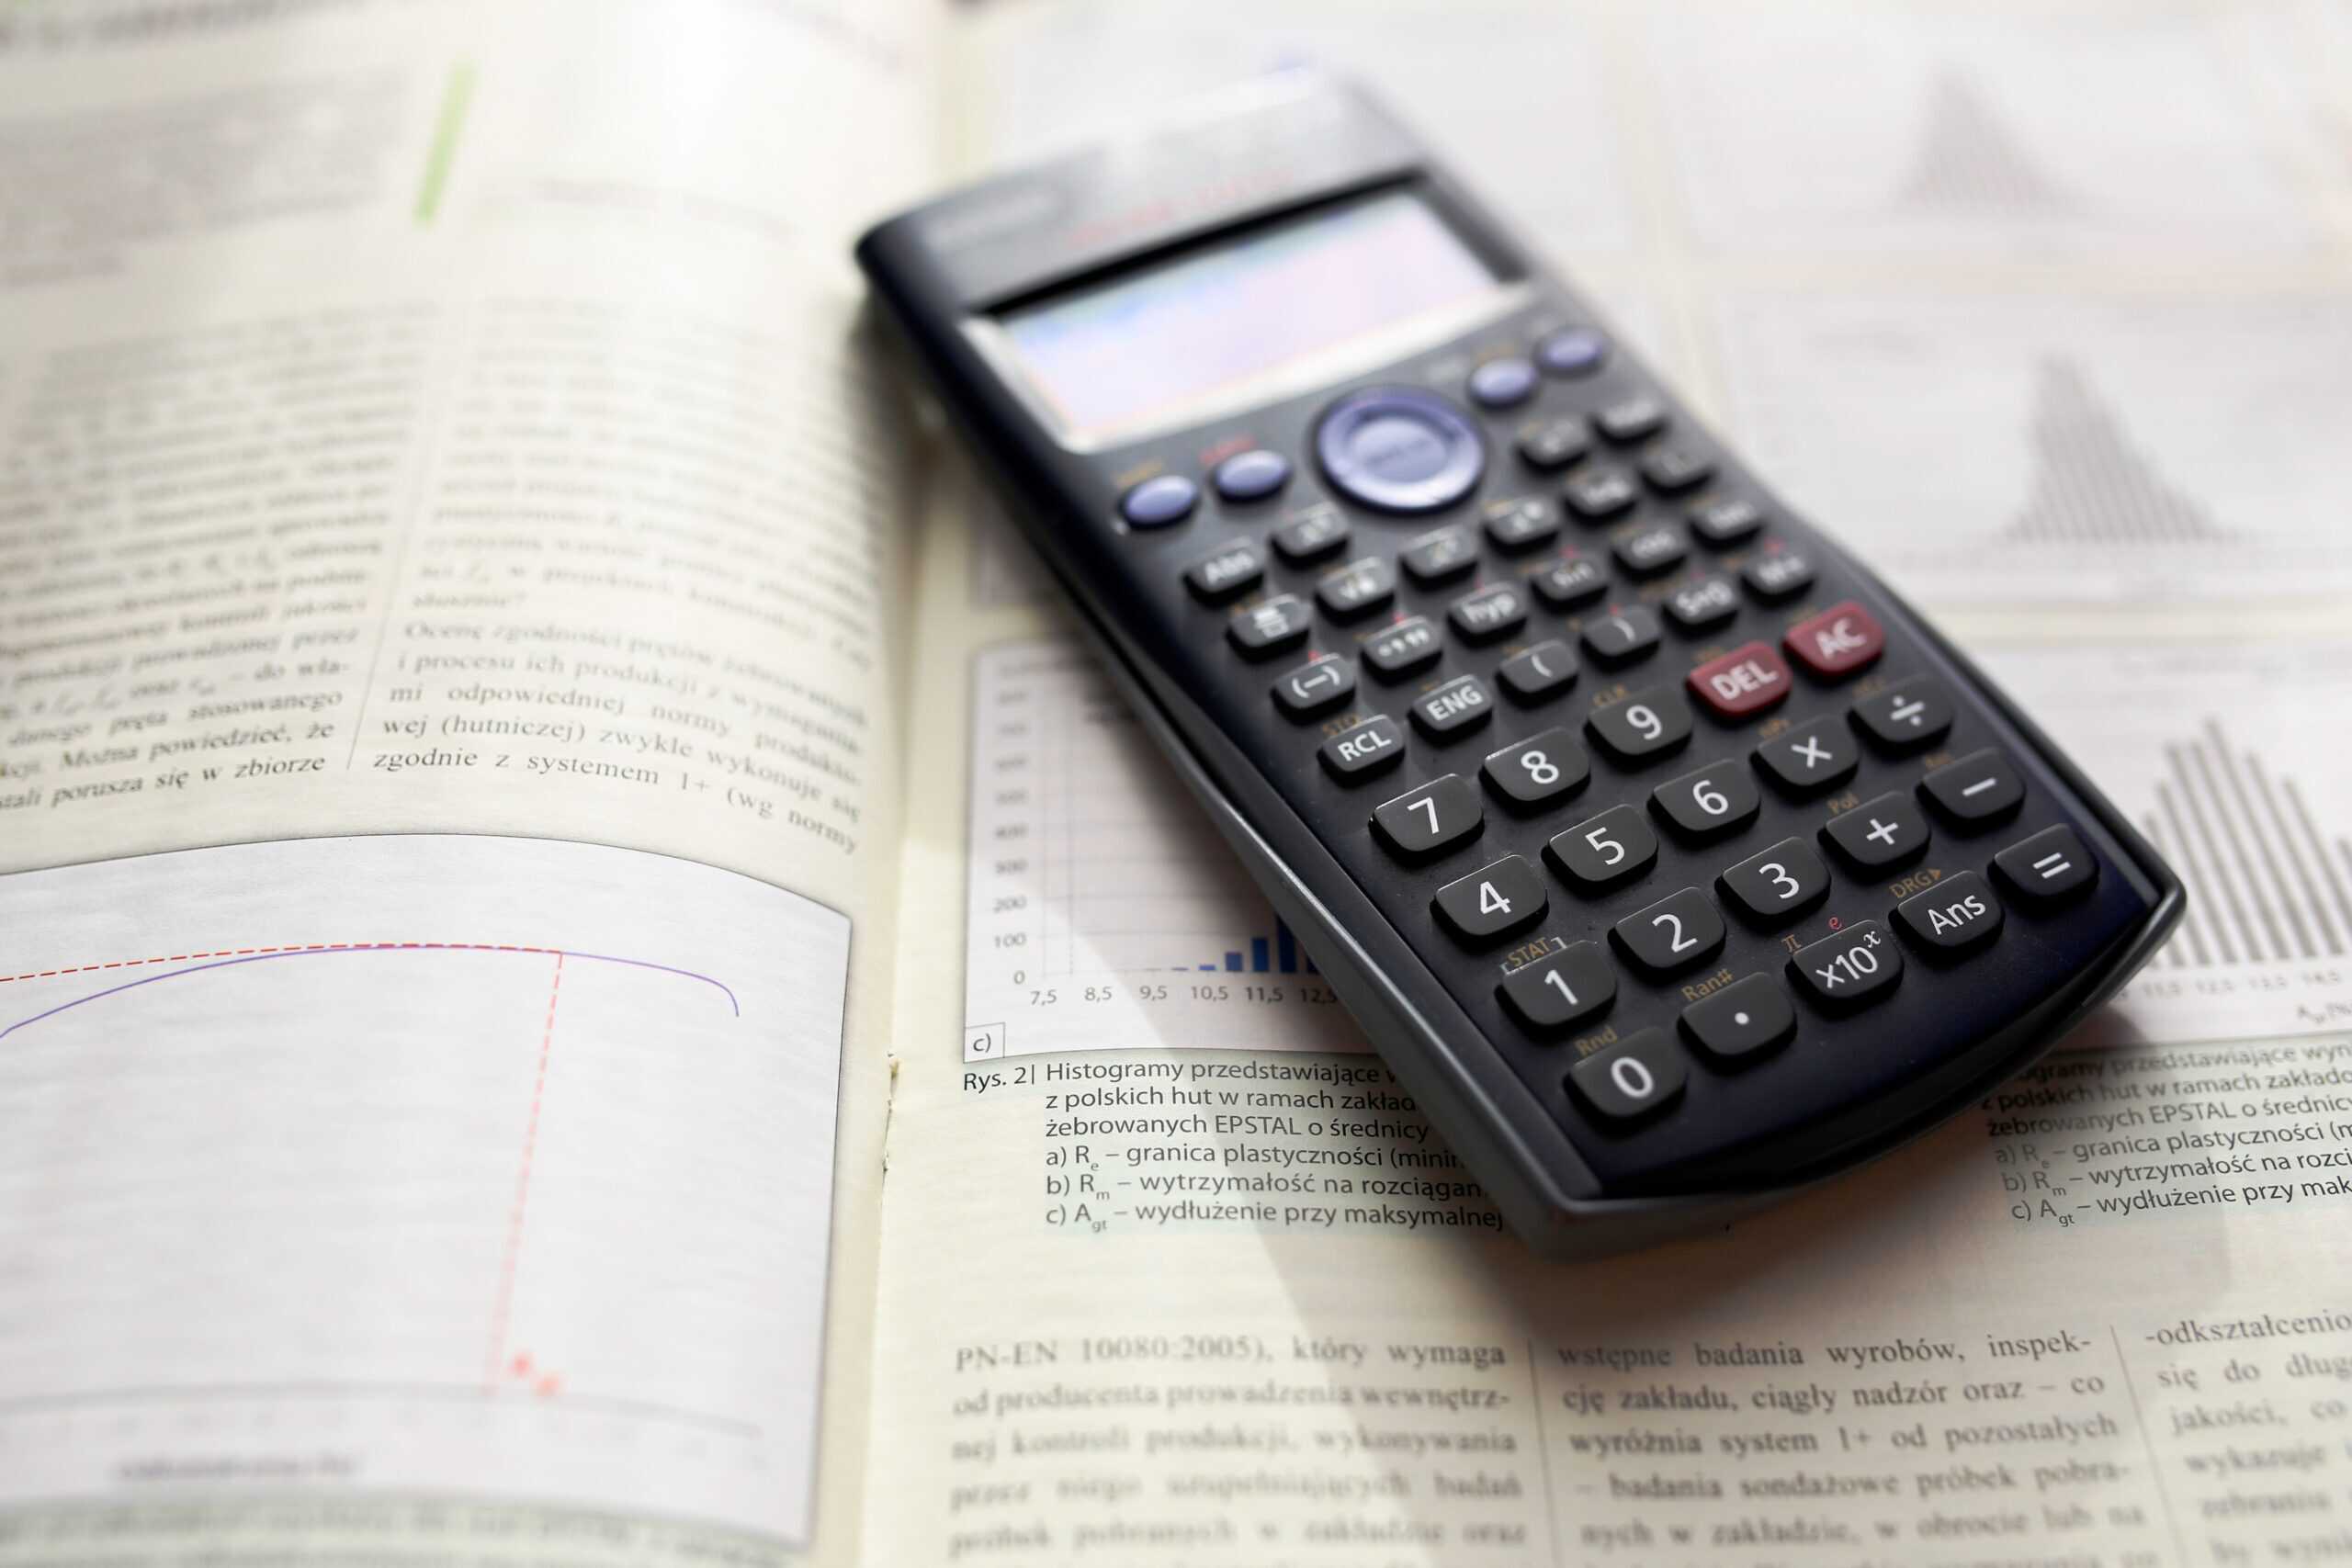 Alcula's new Scientific Calculator « Alcula's Online Calculators' Blog